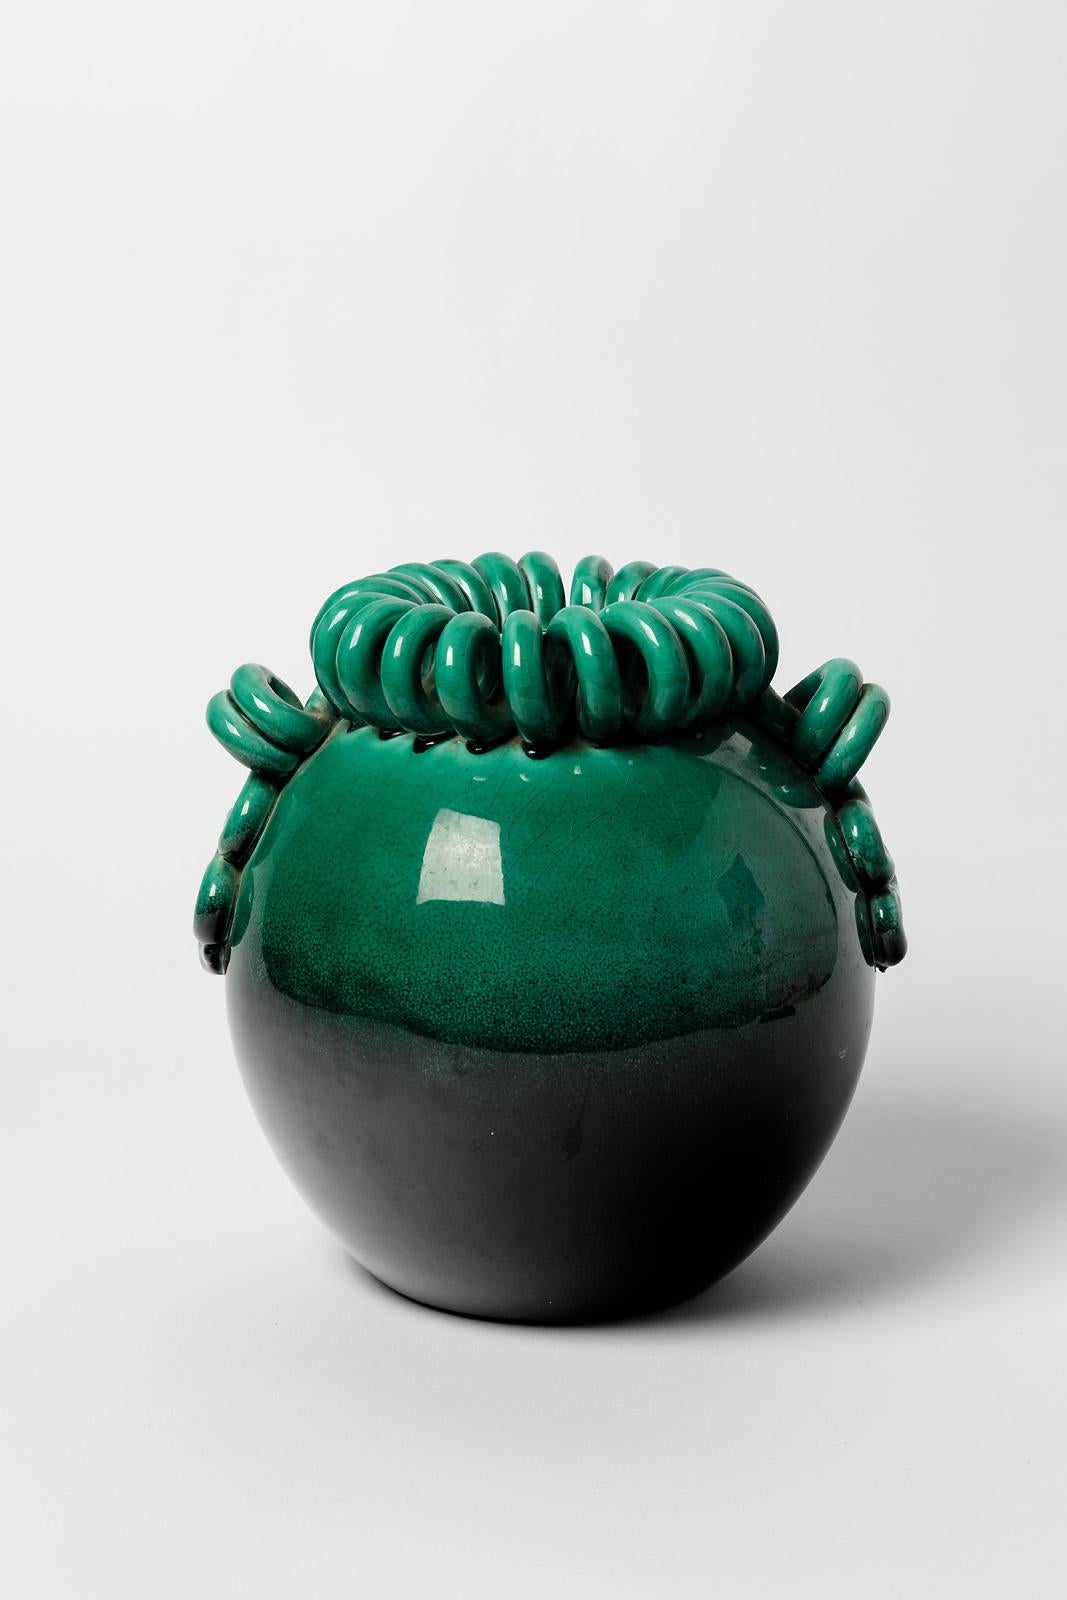 Gustave Asch

Original 20th art deco ceramic vase signed under the base

Circa 1940

Green and black ceramic glazes colors

Signed

height 22 cm
Large 22 cm.